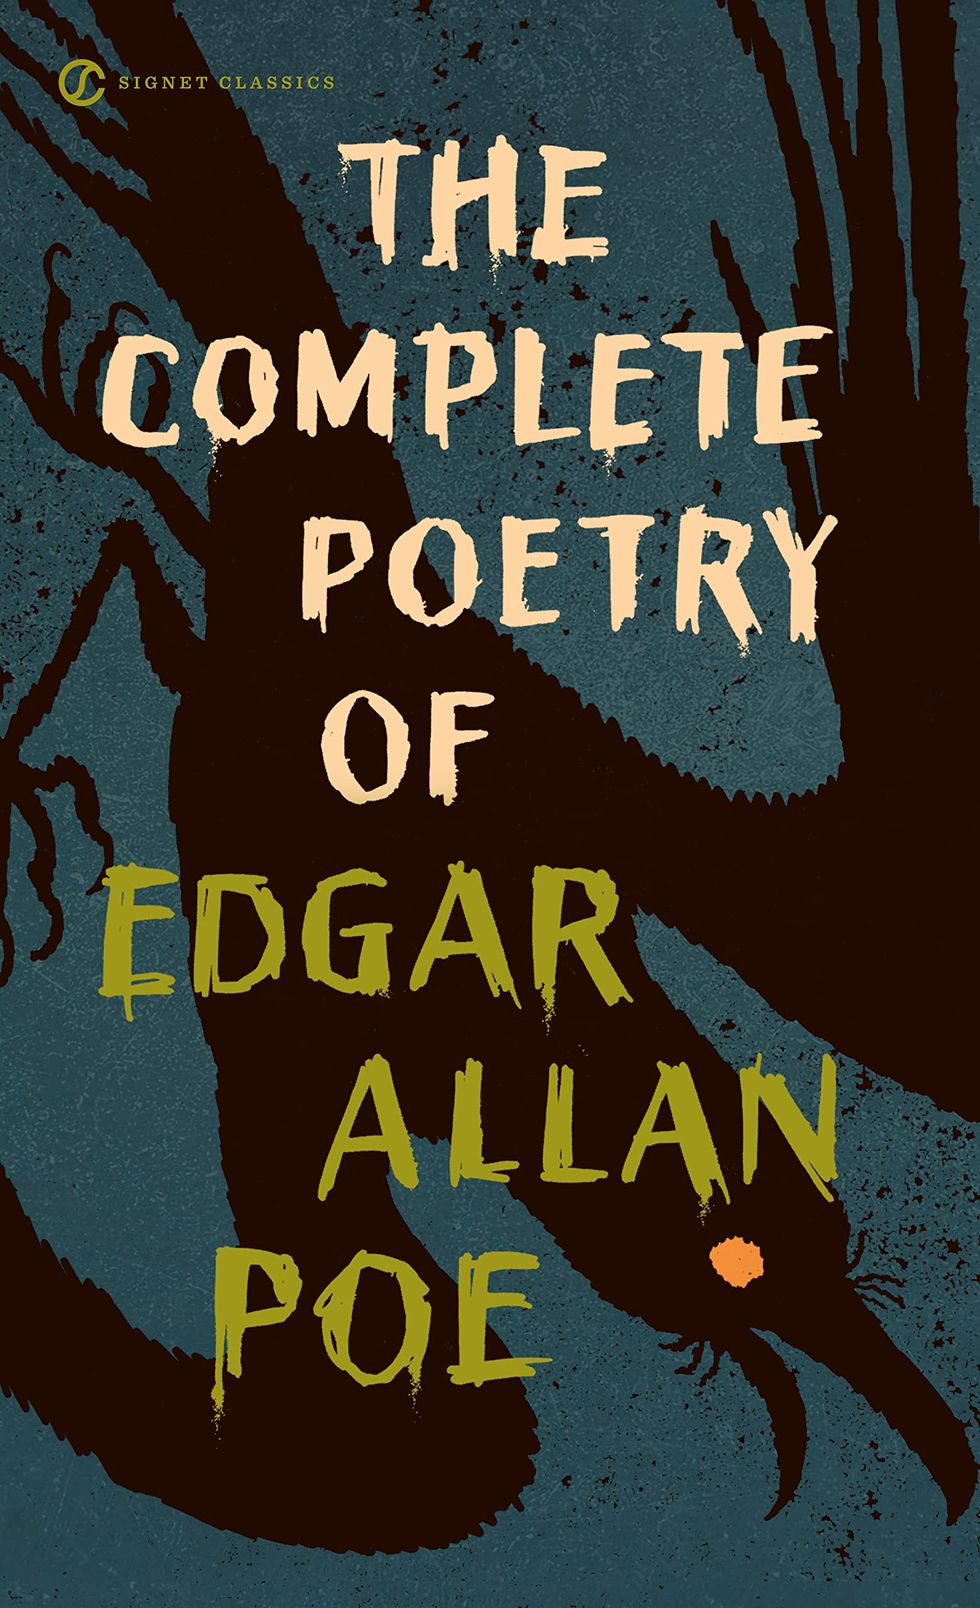 The 13 Best Edgar Allan Poe Books